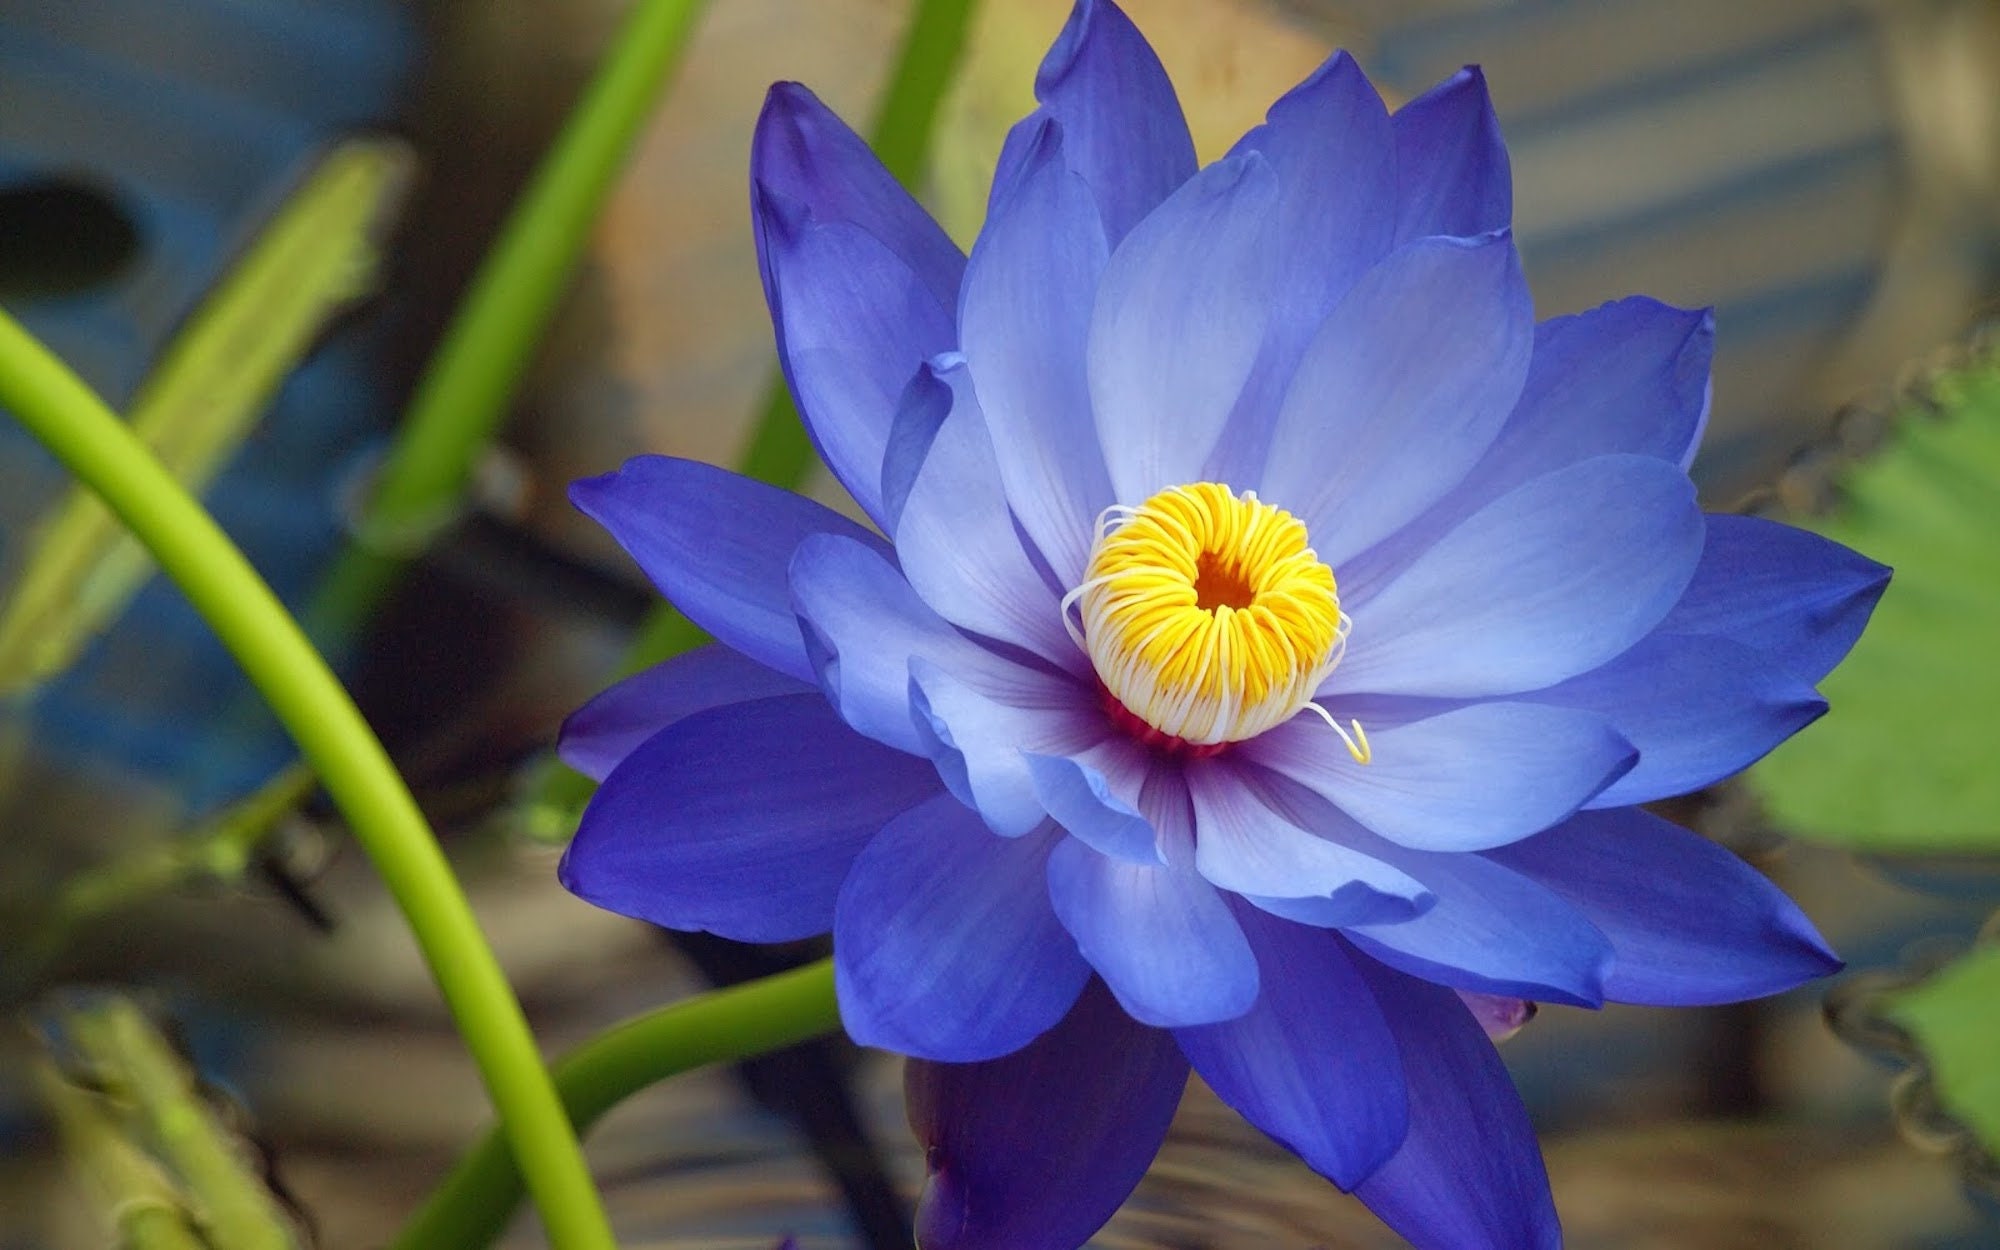 Blue Egyptian Lotus (Nymphaea caerulea)